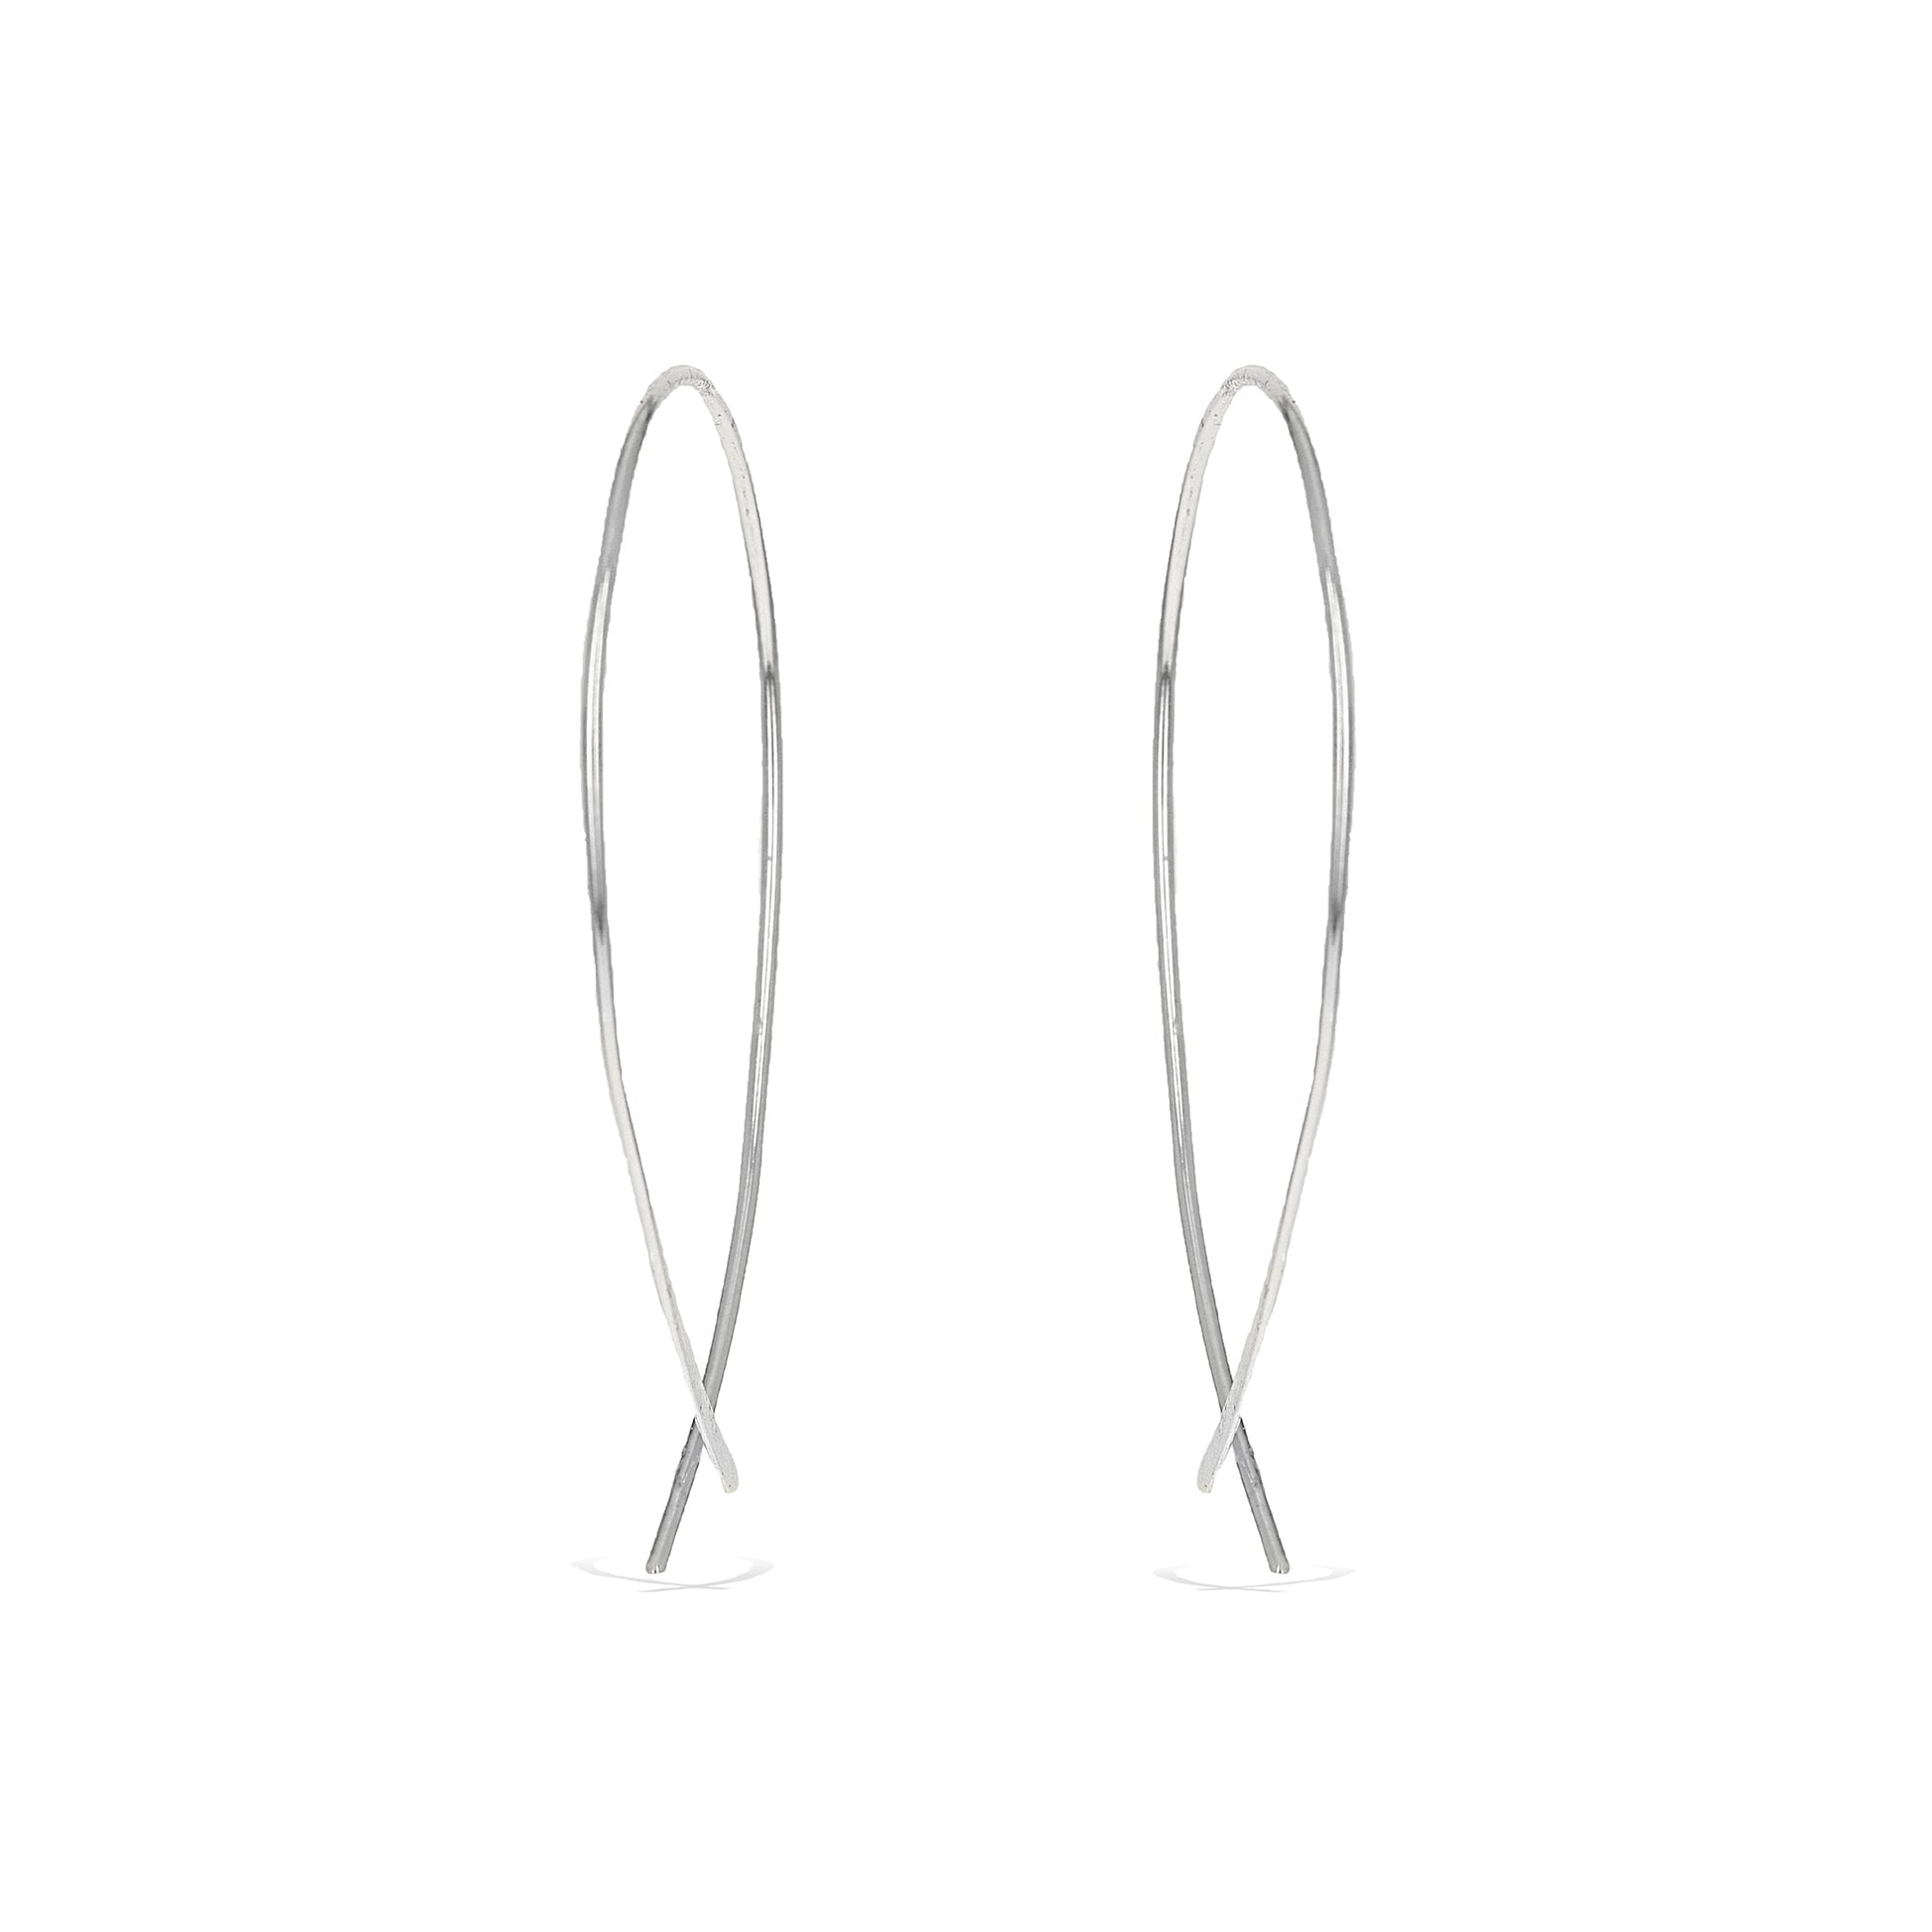 Thin Sterling Silver Criss Cross Threader Hoop Earrings 